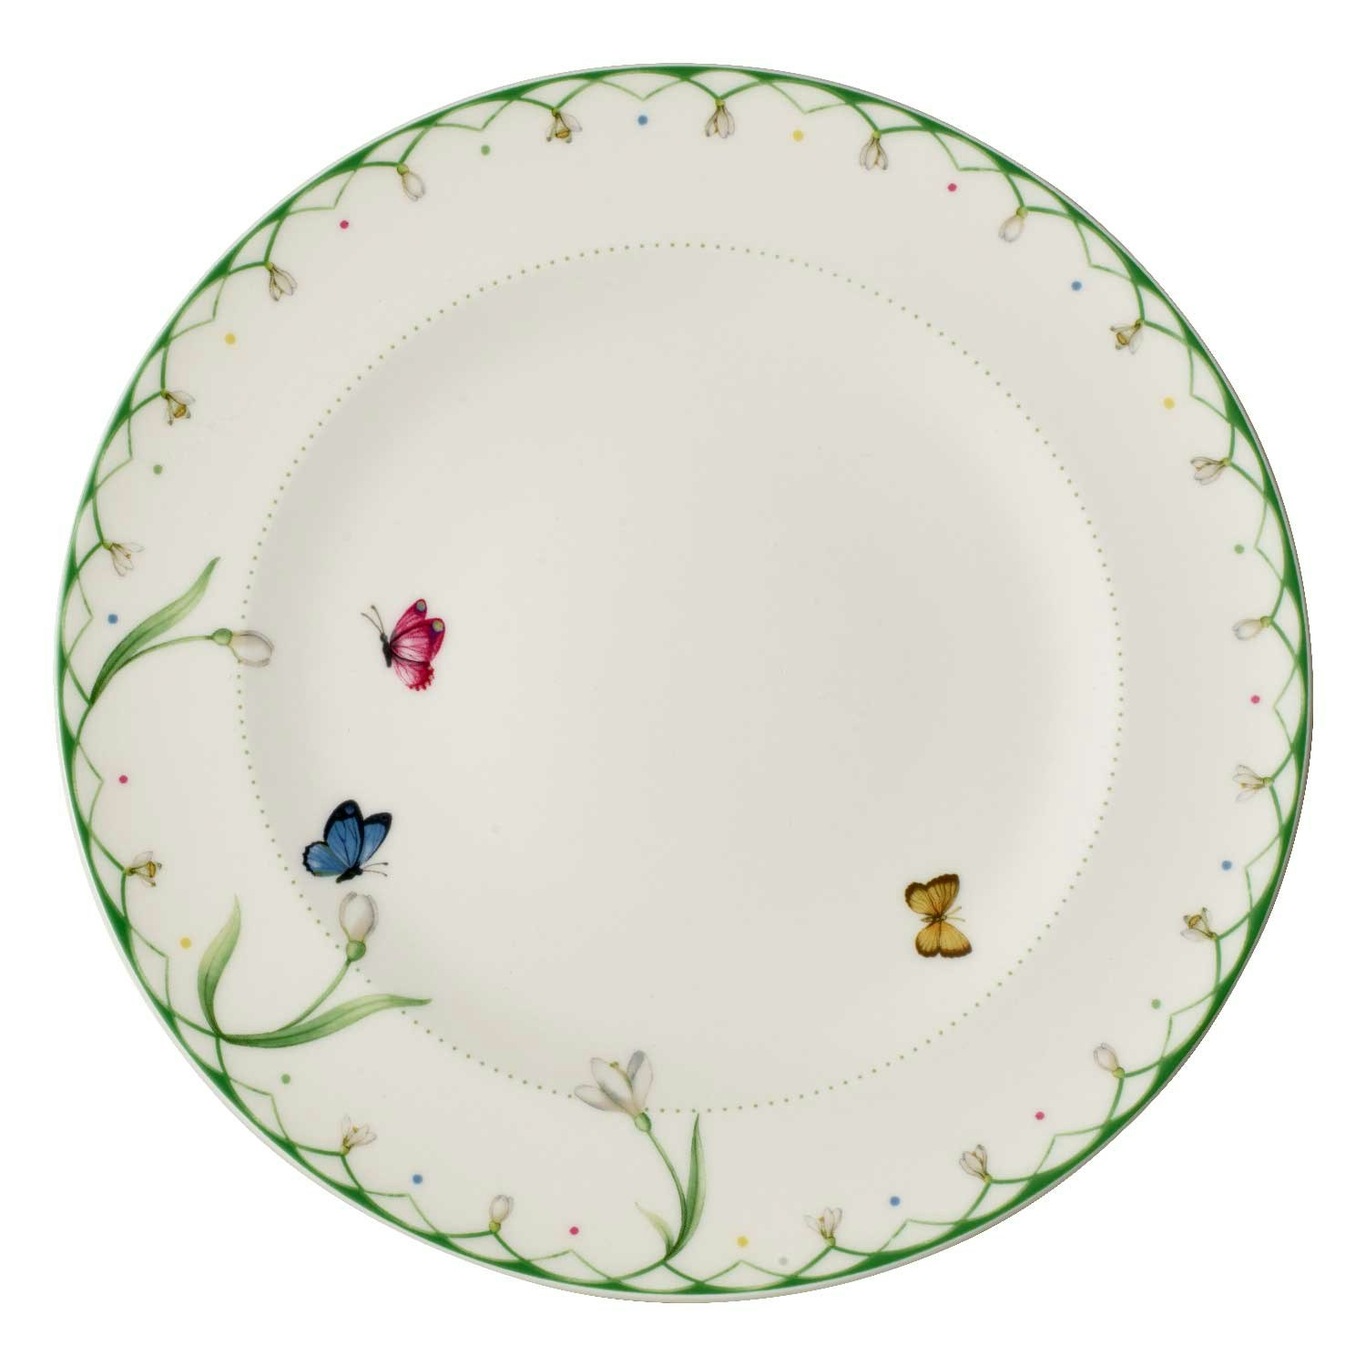 Colourful Spring Dinner Plate, 27 cm